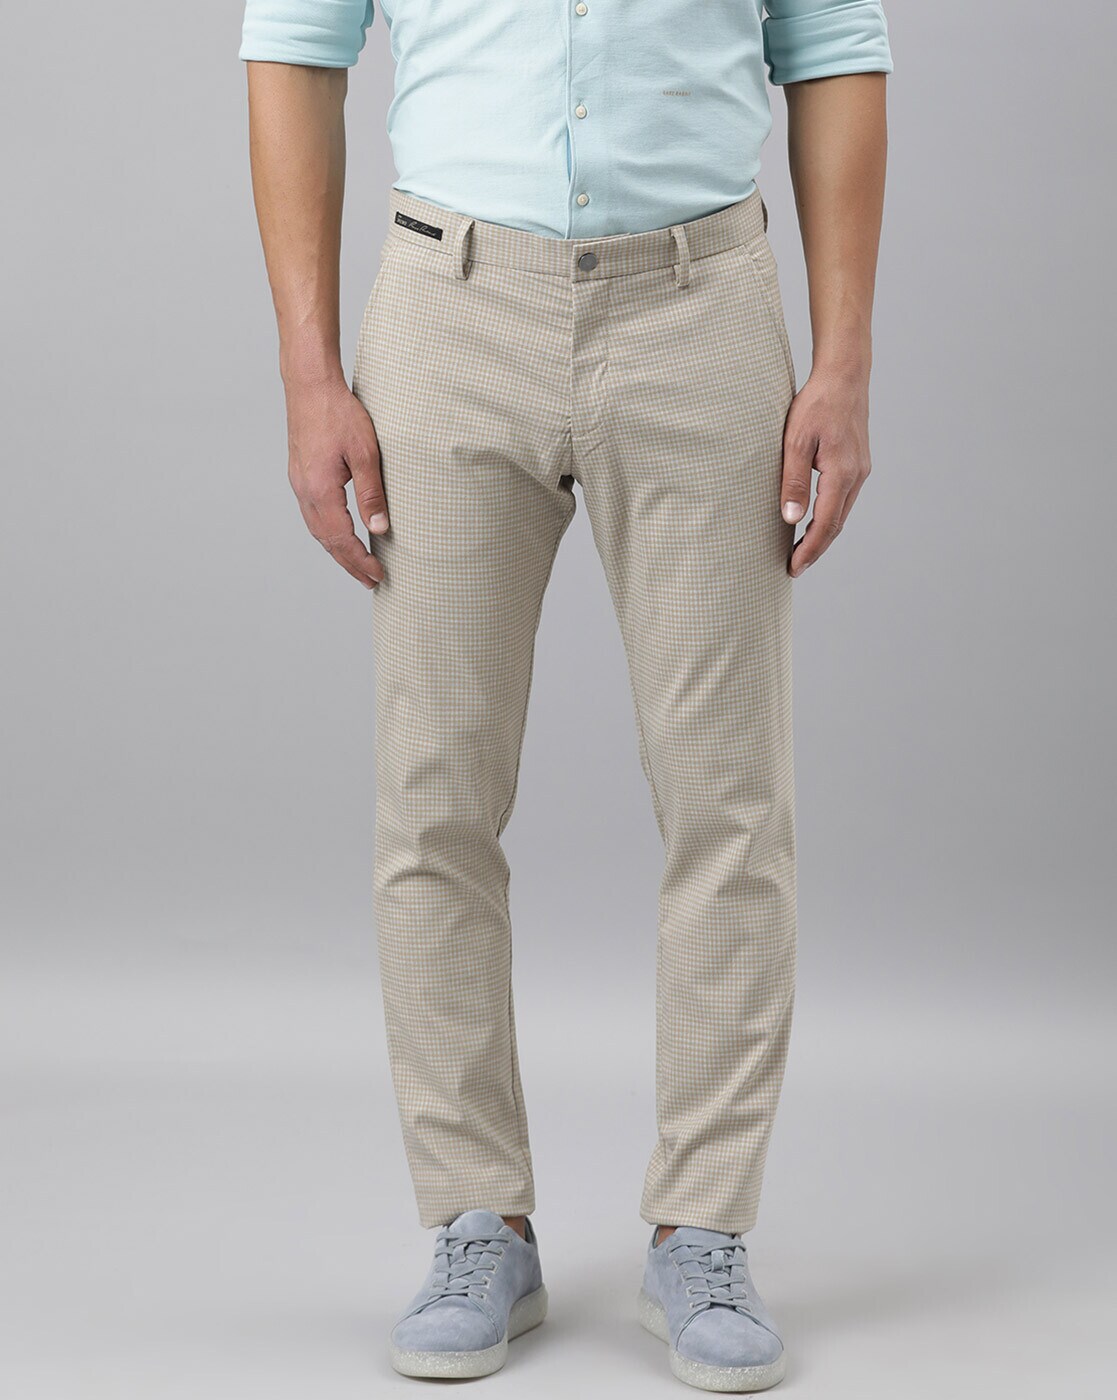 Buy RARE RABBIT Men's Slim Fit Spock 3 Solid Textured Denim Pants (Grey,  34) at Amazon.in